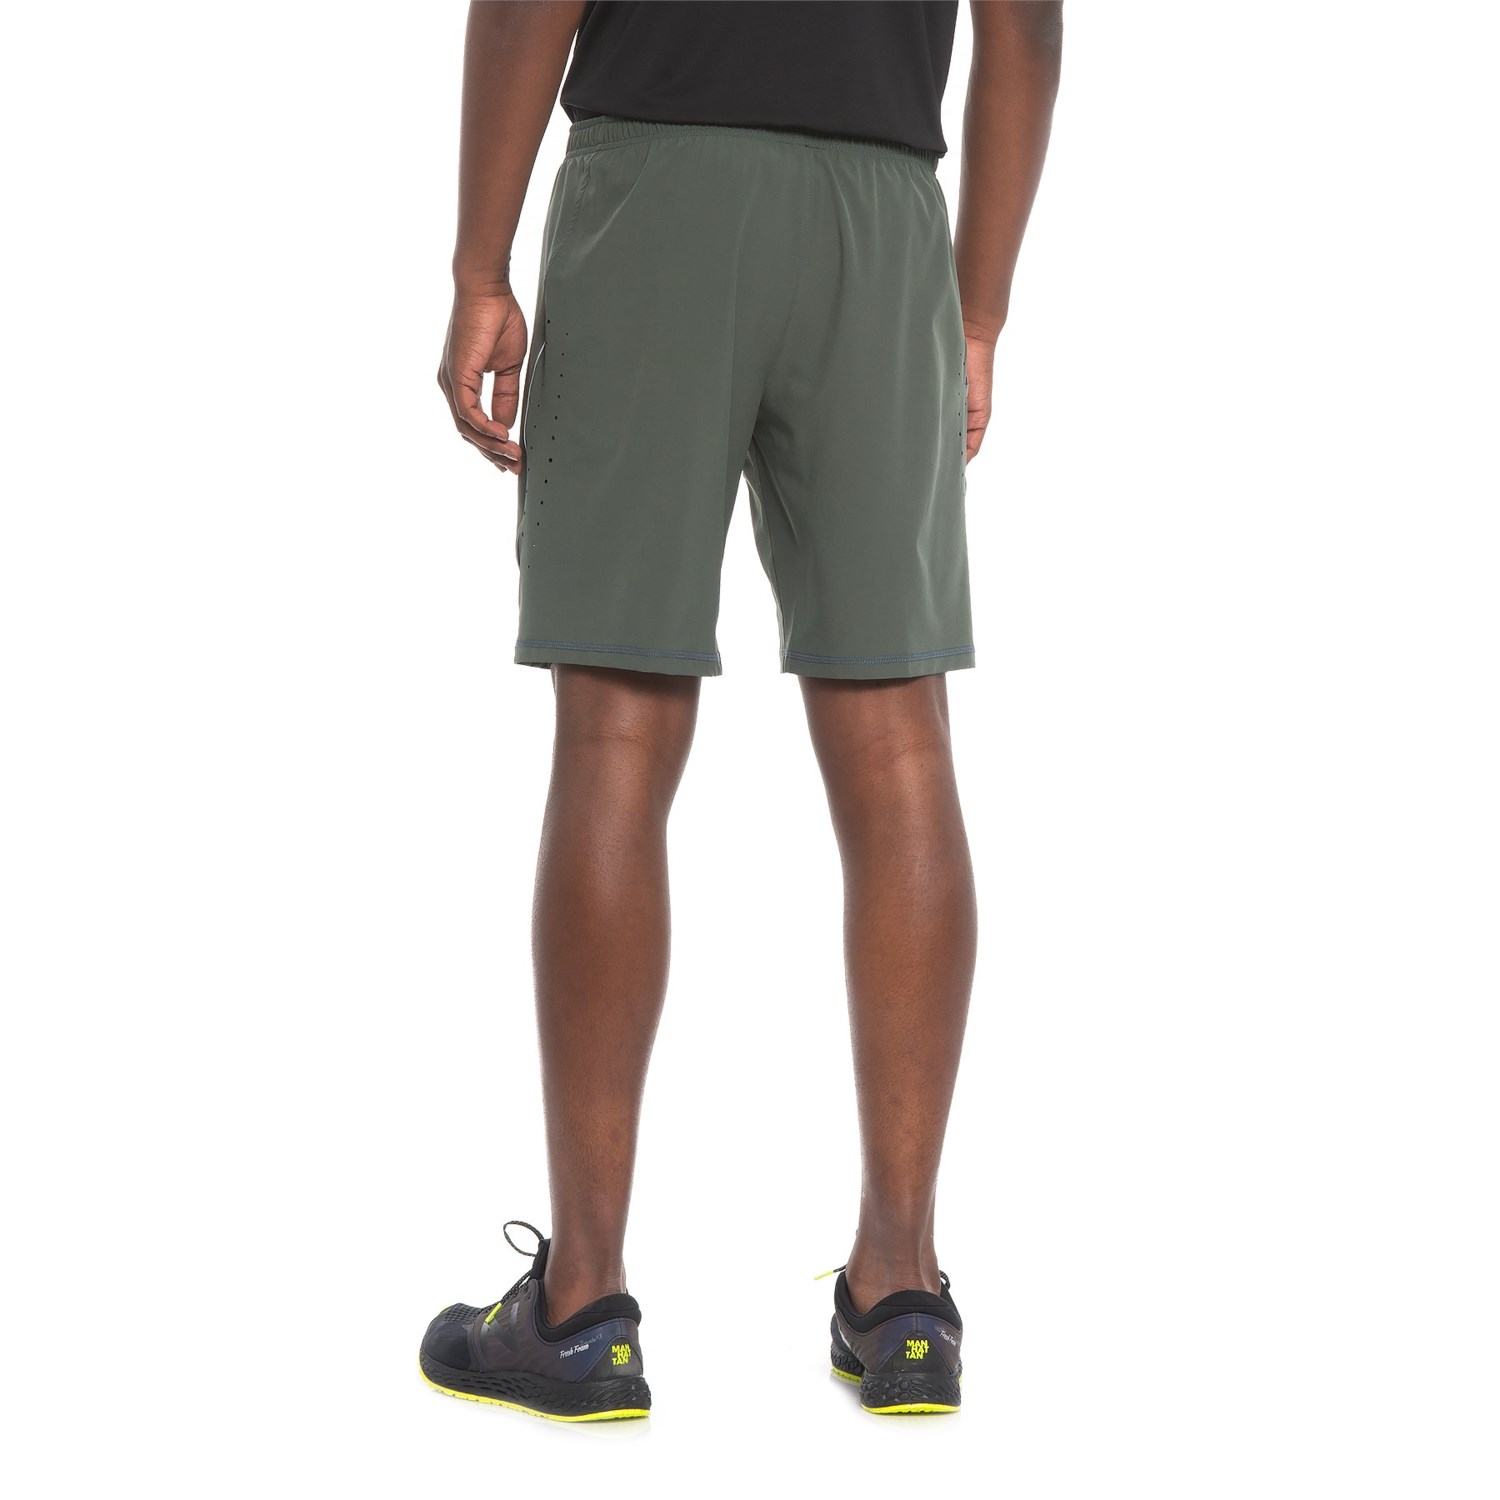 Skora Woven Stretch Shorts (For Men) - Save 50%